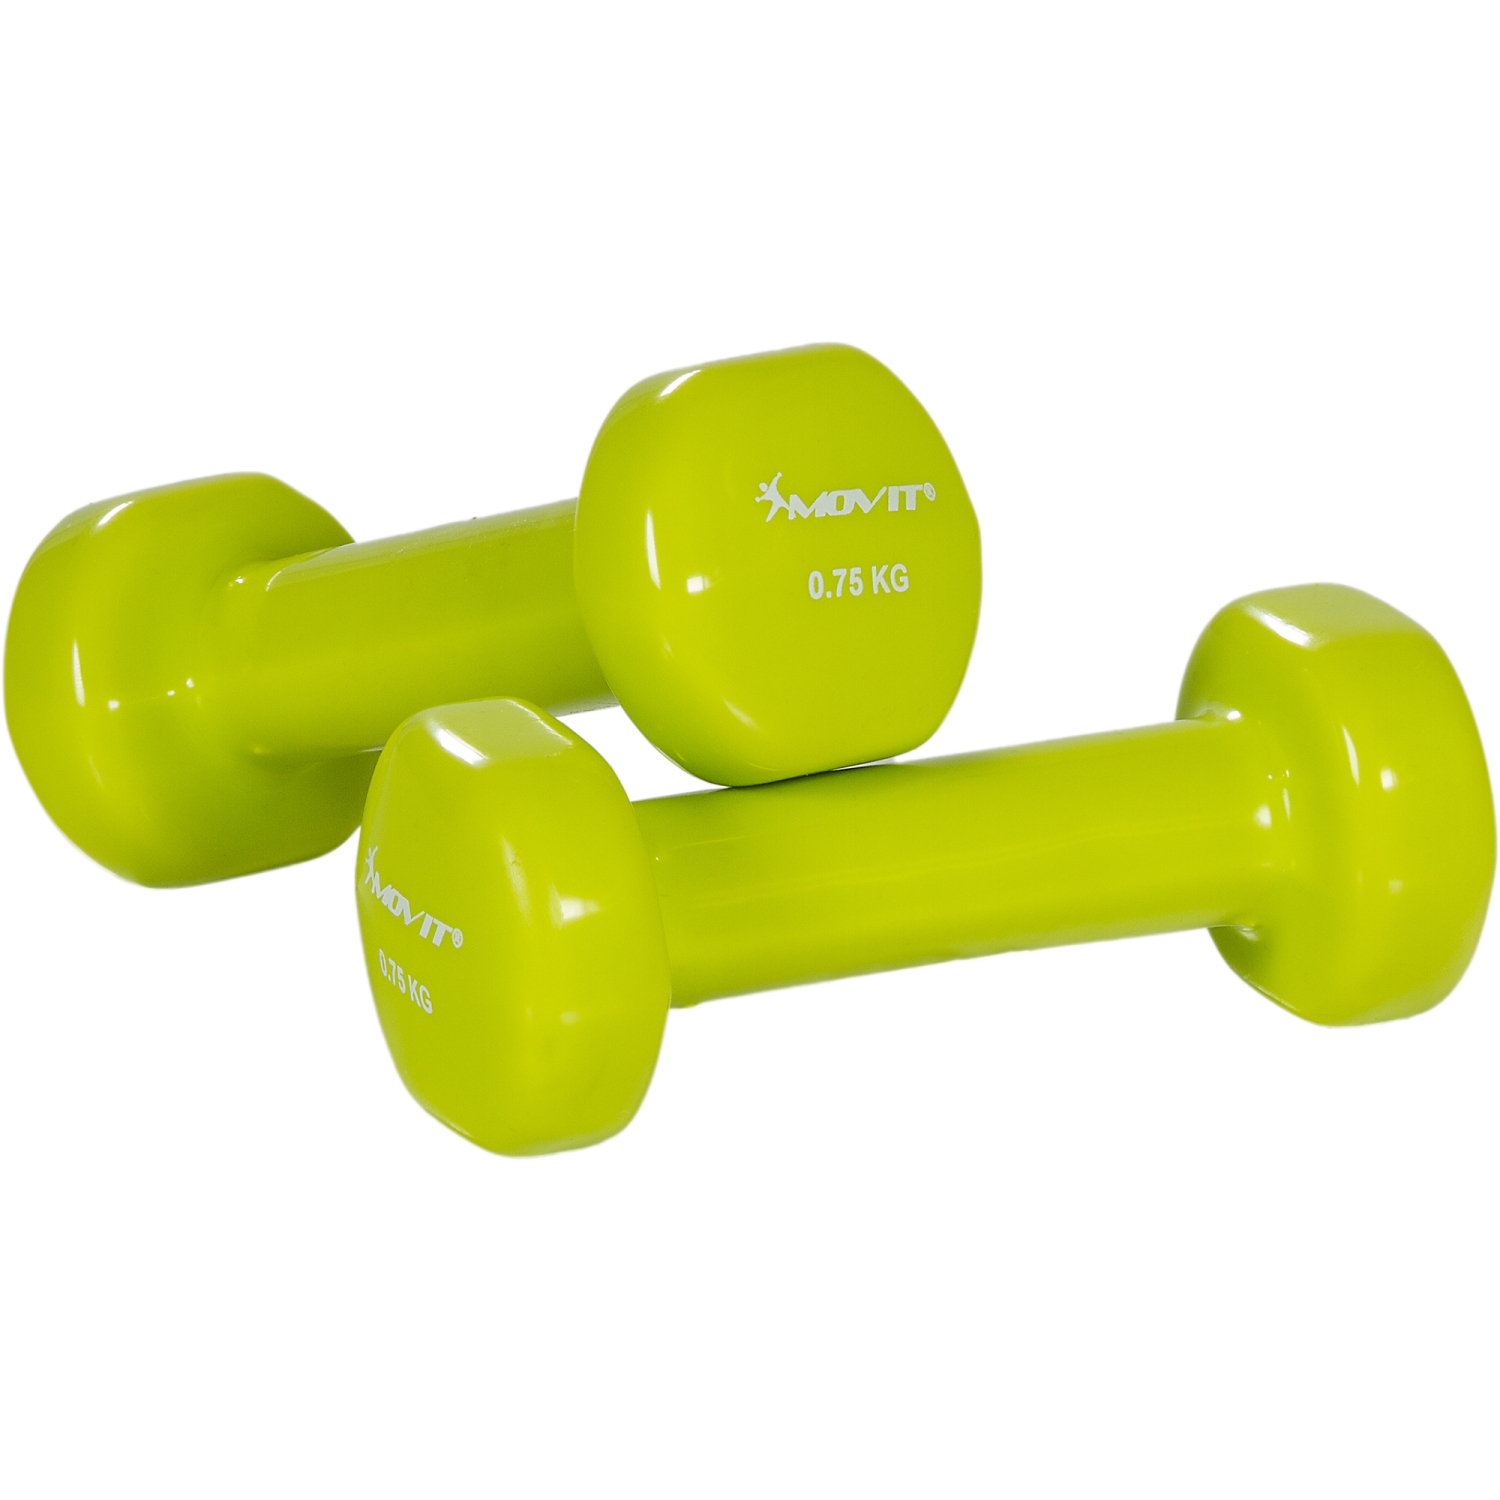 Dumbells set – Gewichten – Fitness – 2x 0.75 kg – Licht groen